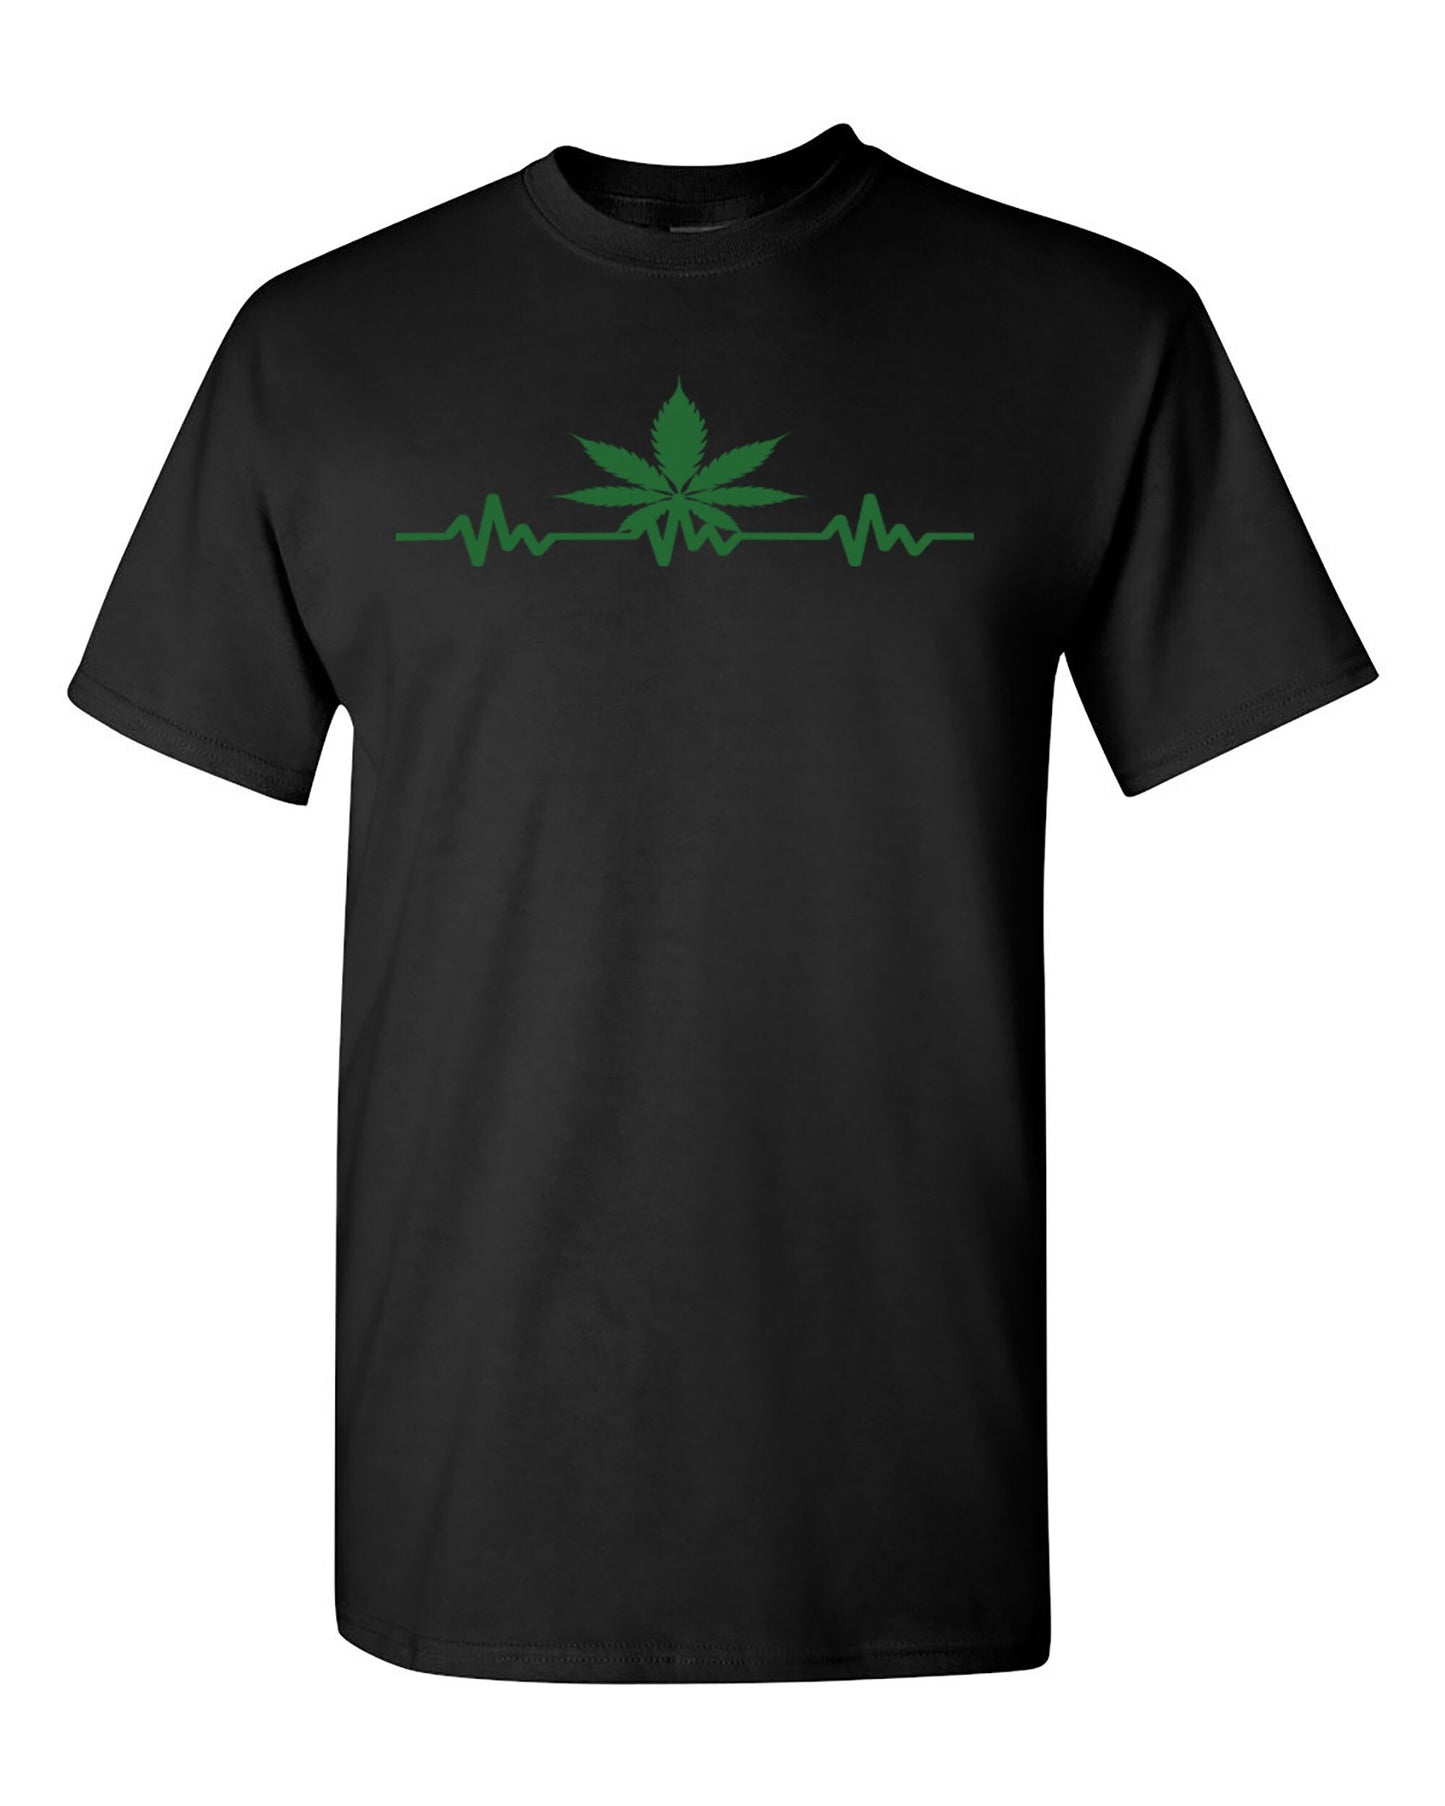 Weed Heartbeat T-shirt Cannabis Fun #152